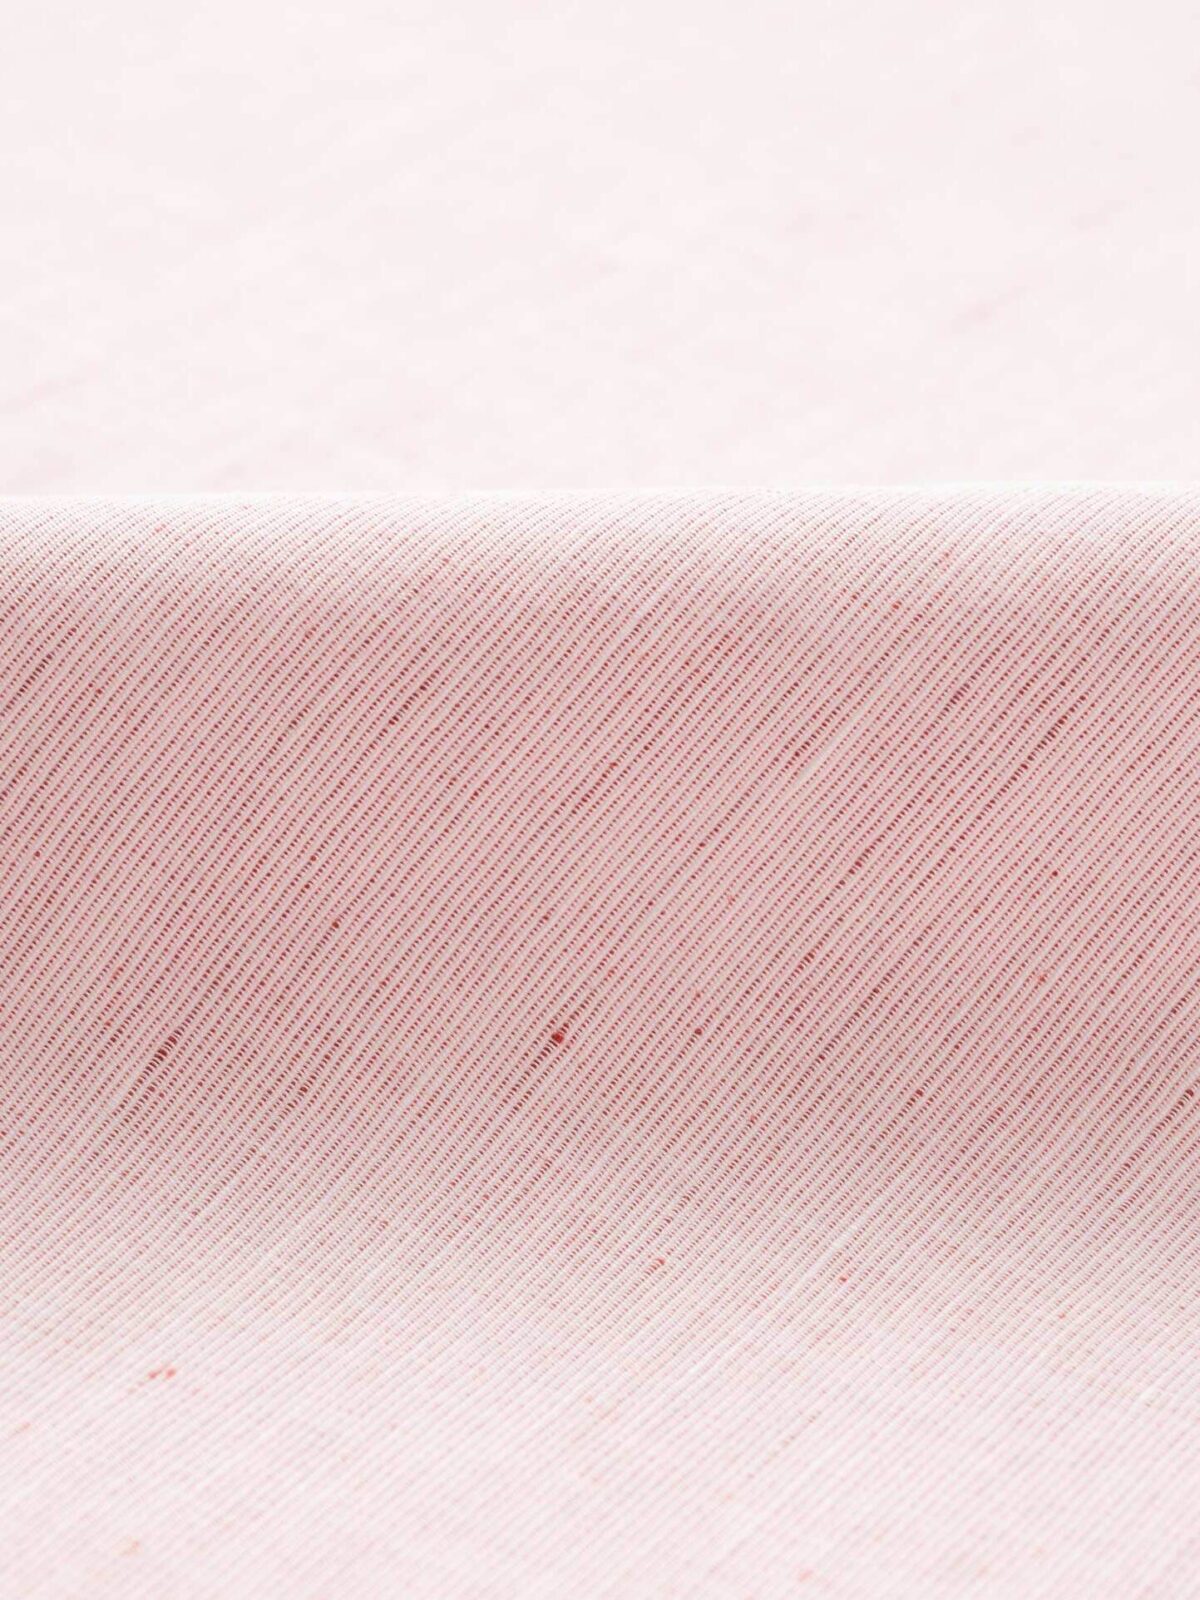 Coral 120s Cotton and Linen Plain Weave Shirt by Proper Cloth